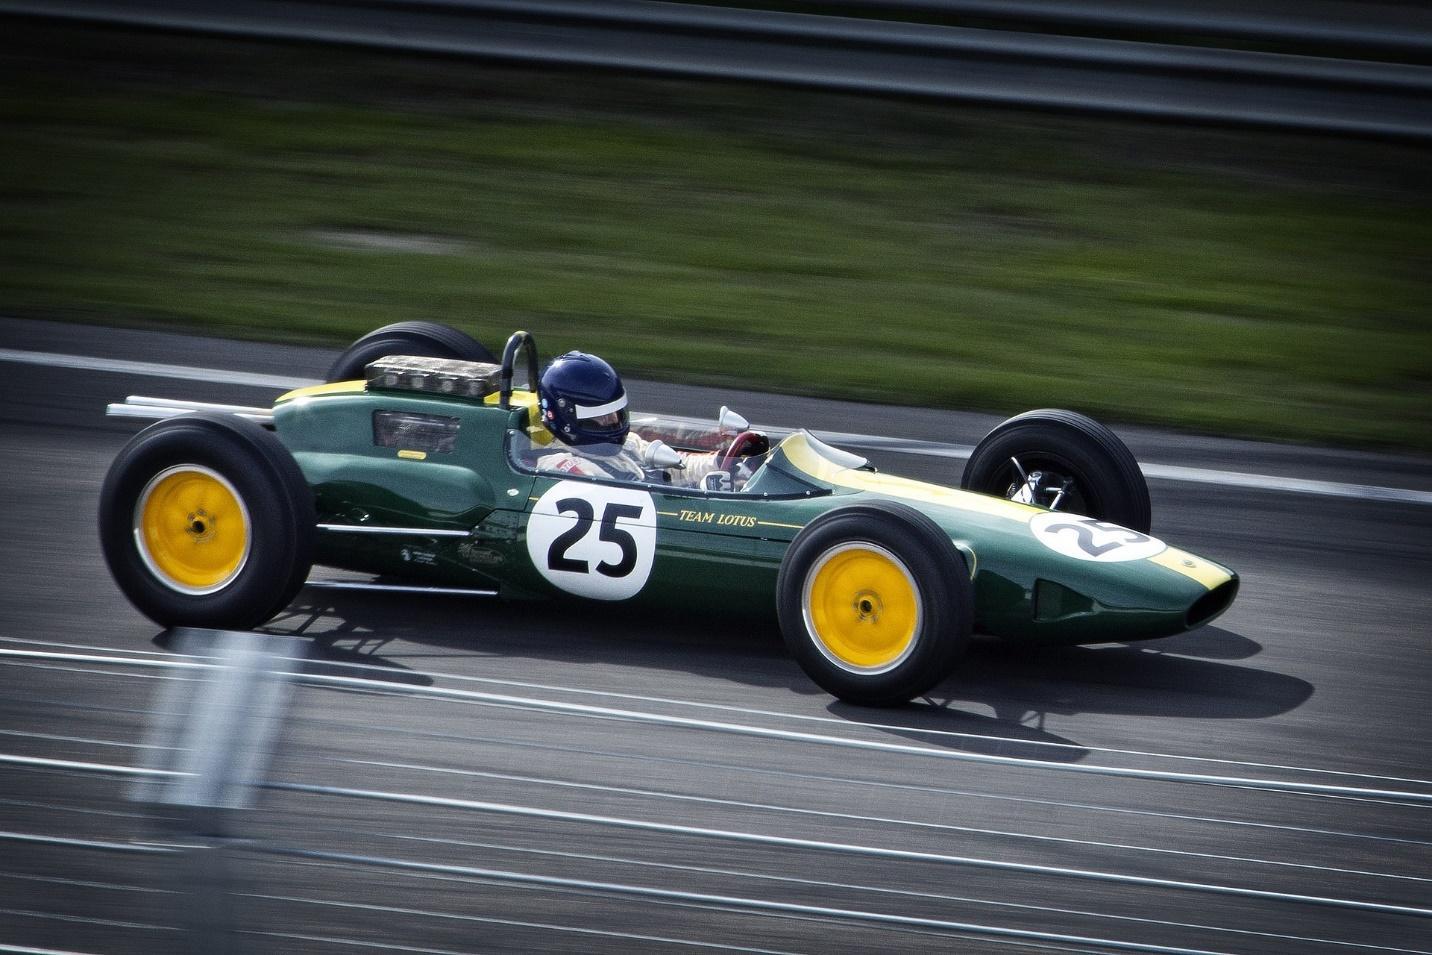 A green Formula 1 car racing on a track. Free photo on Pixabay